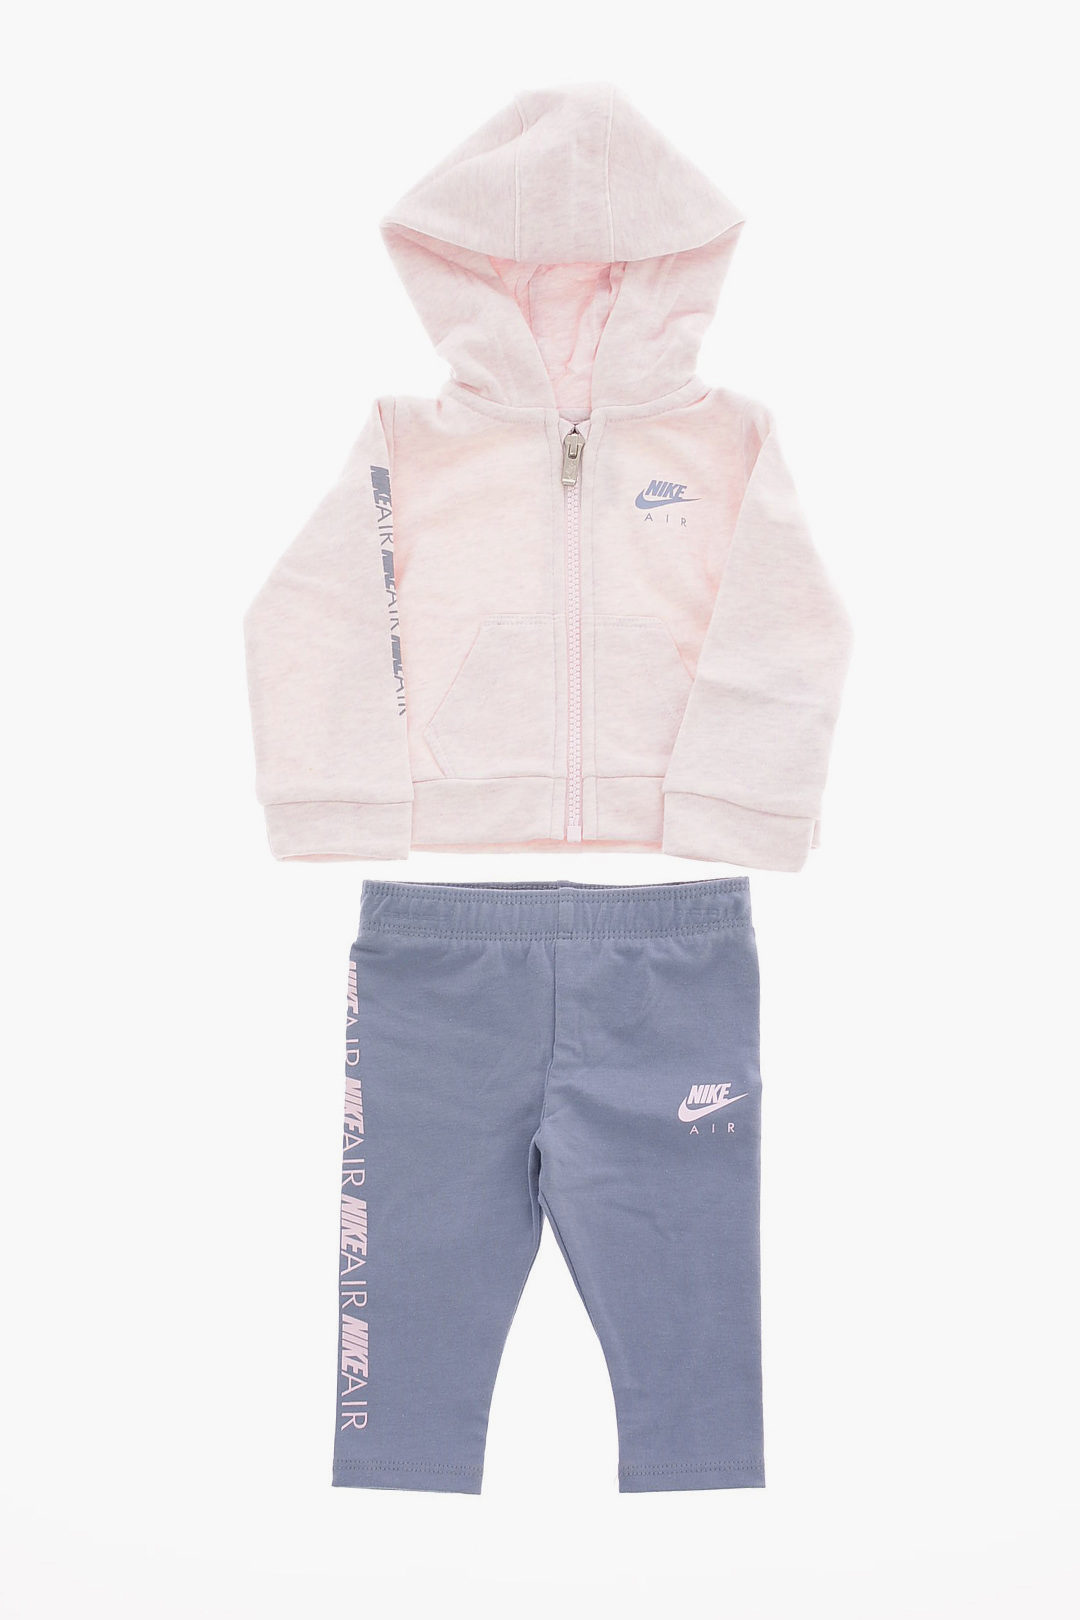 Nike KIDS AIR Hoodie Sweatshirt AND Logo Side Band Leggings Set girls -  Glamood Outlet